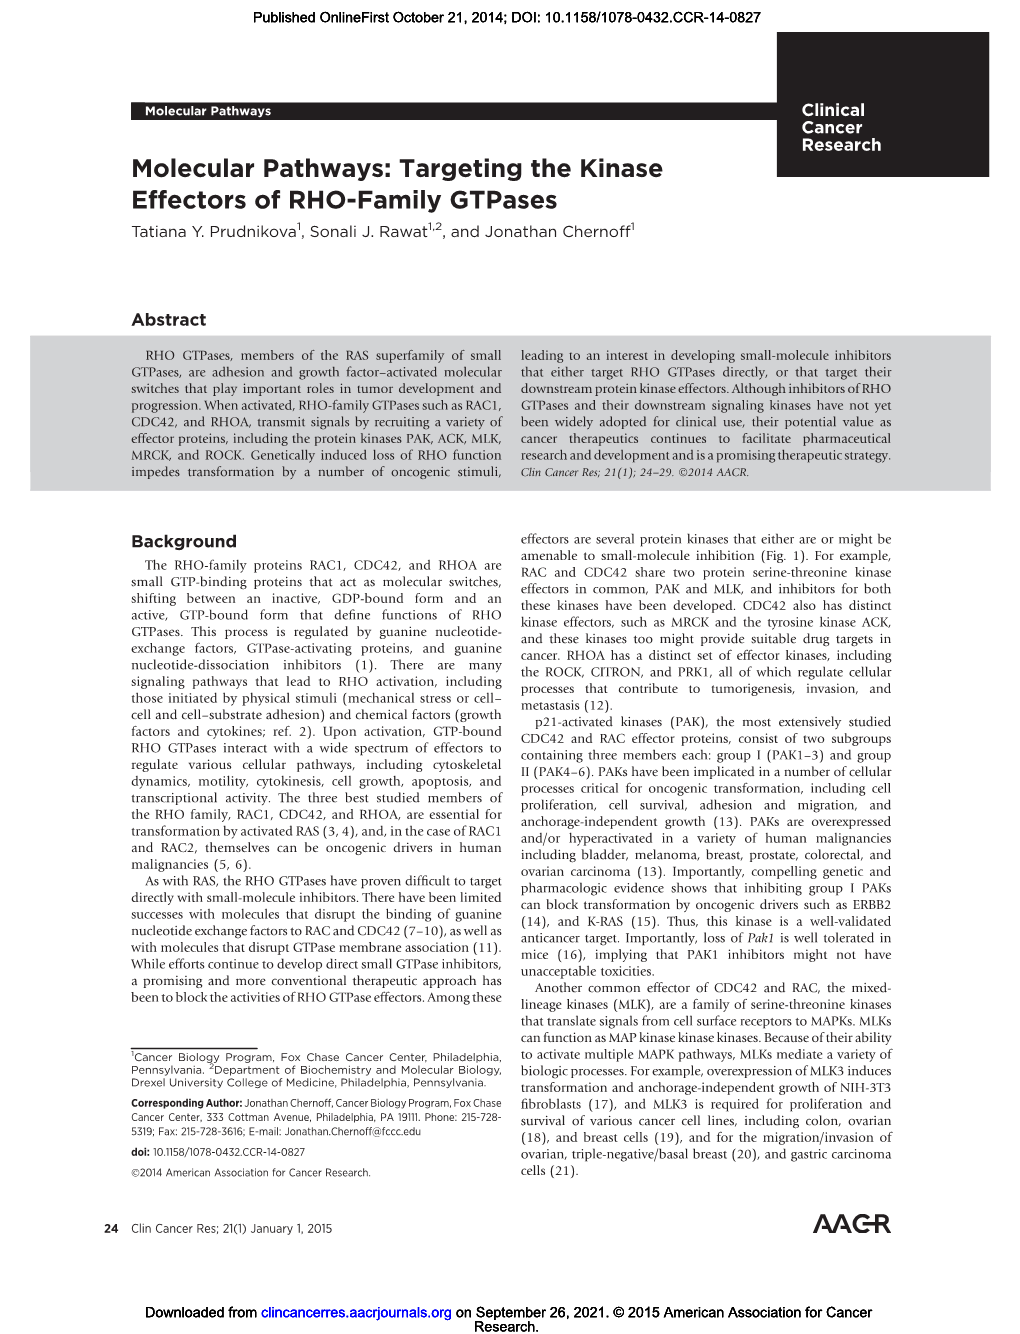 Targeting the Kinase Effectors of RHO-Family Gtpases Tatiana Y